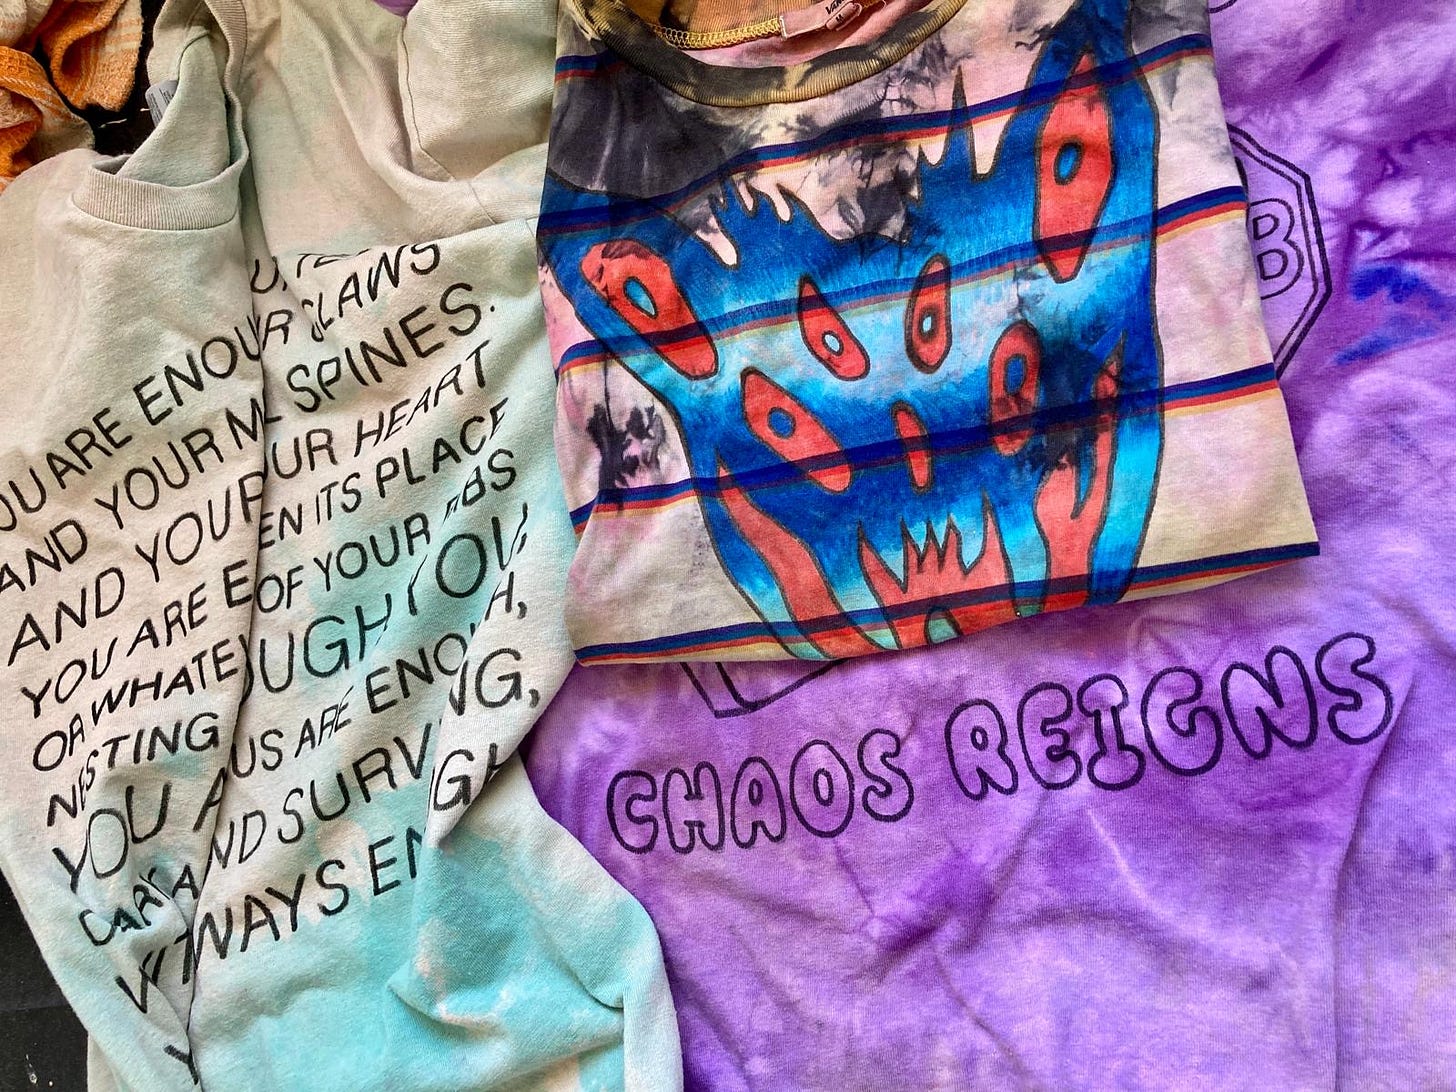 "Chaos reigns" written on tie die shirt